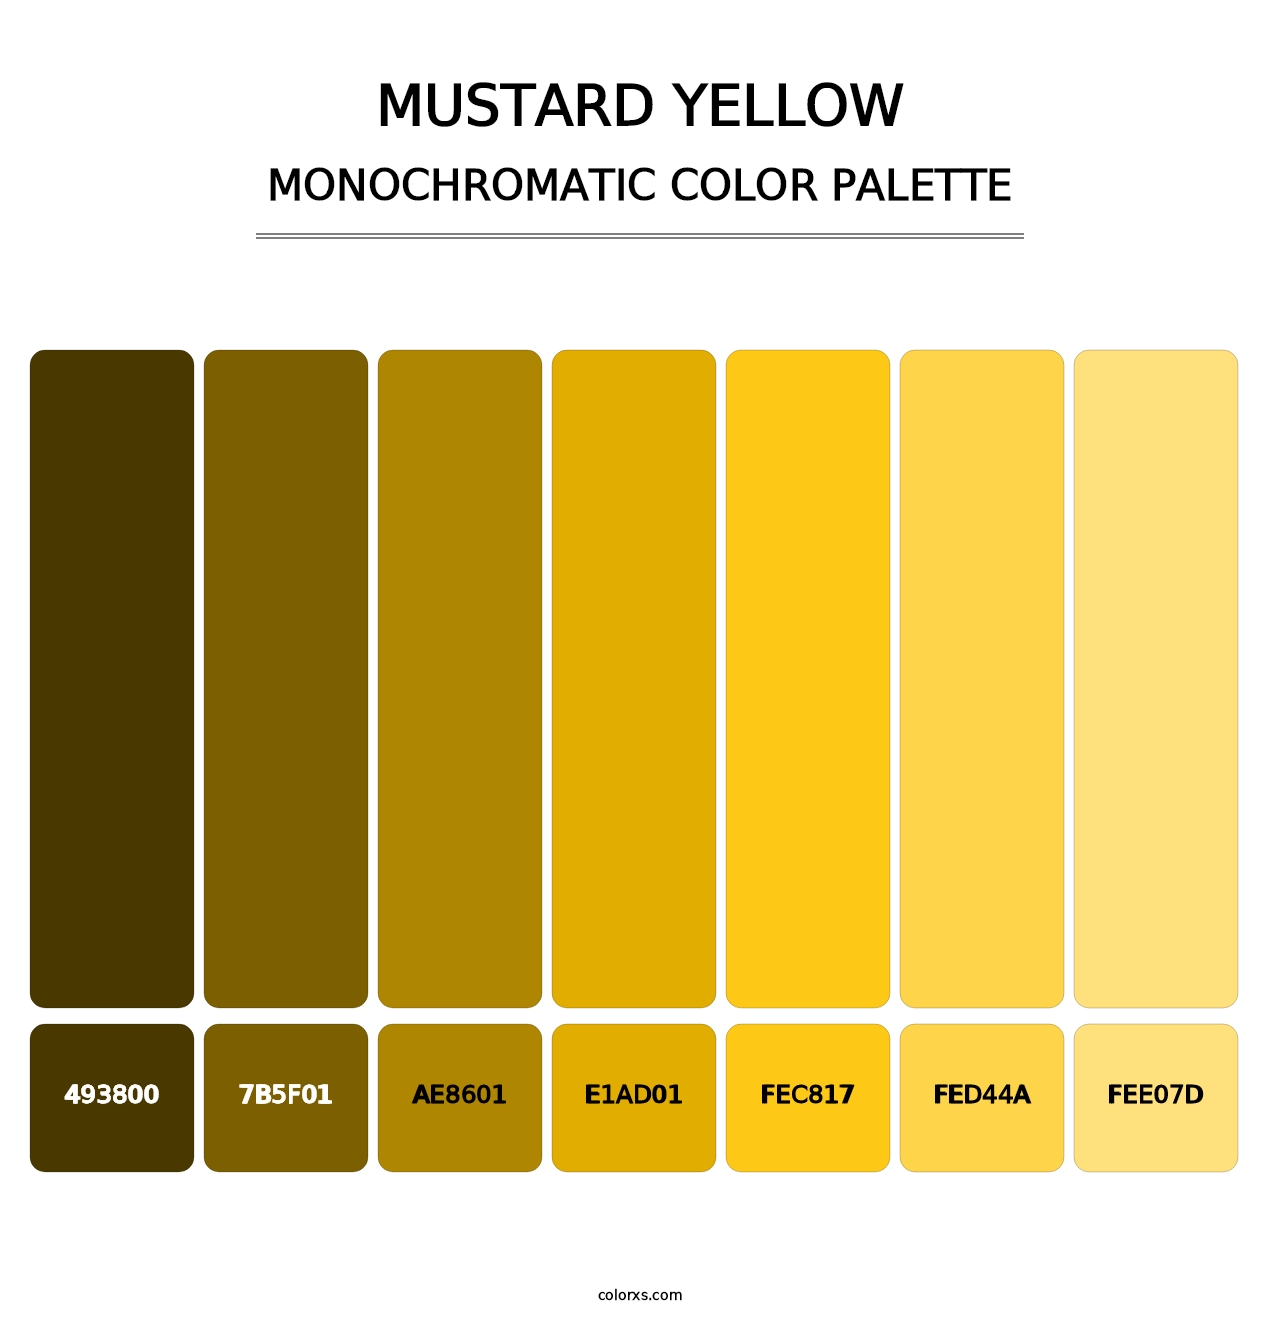 Mustard Yellow - Monochromatic Color Palette